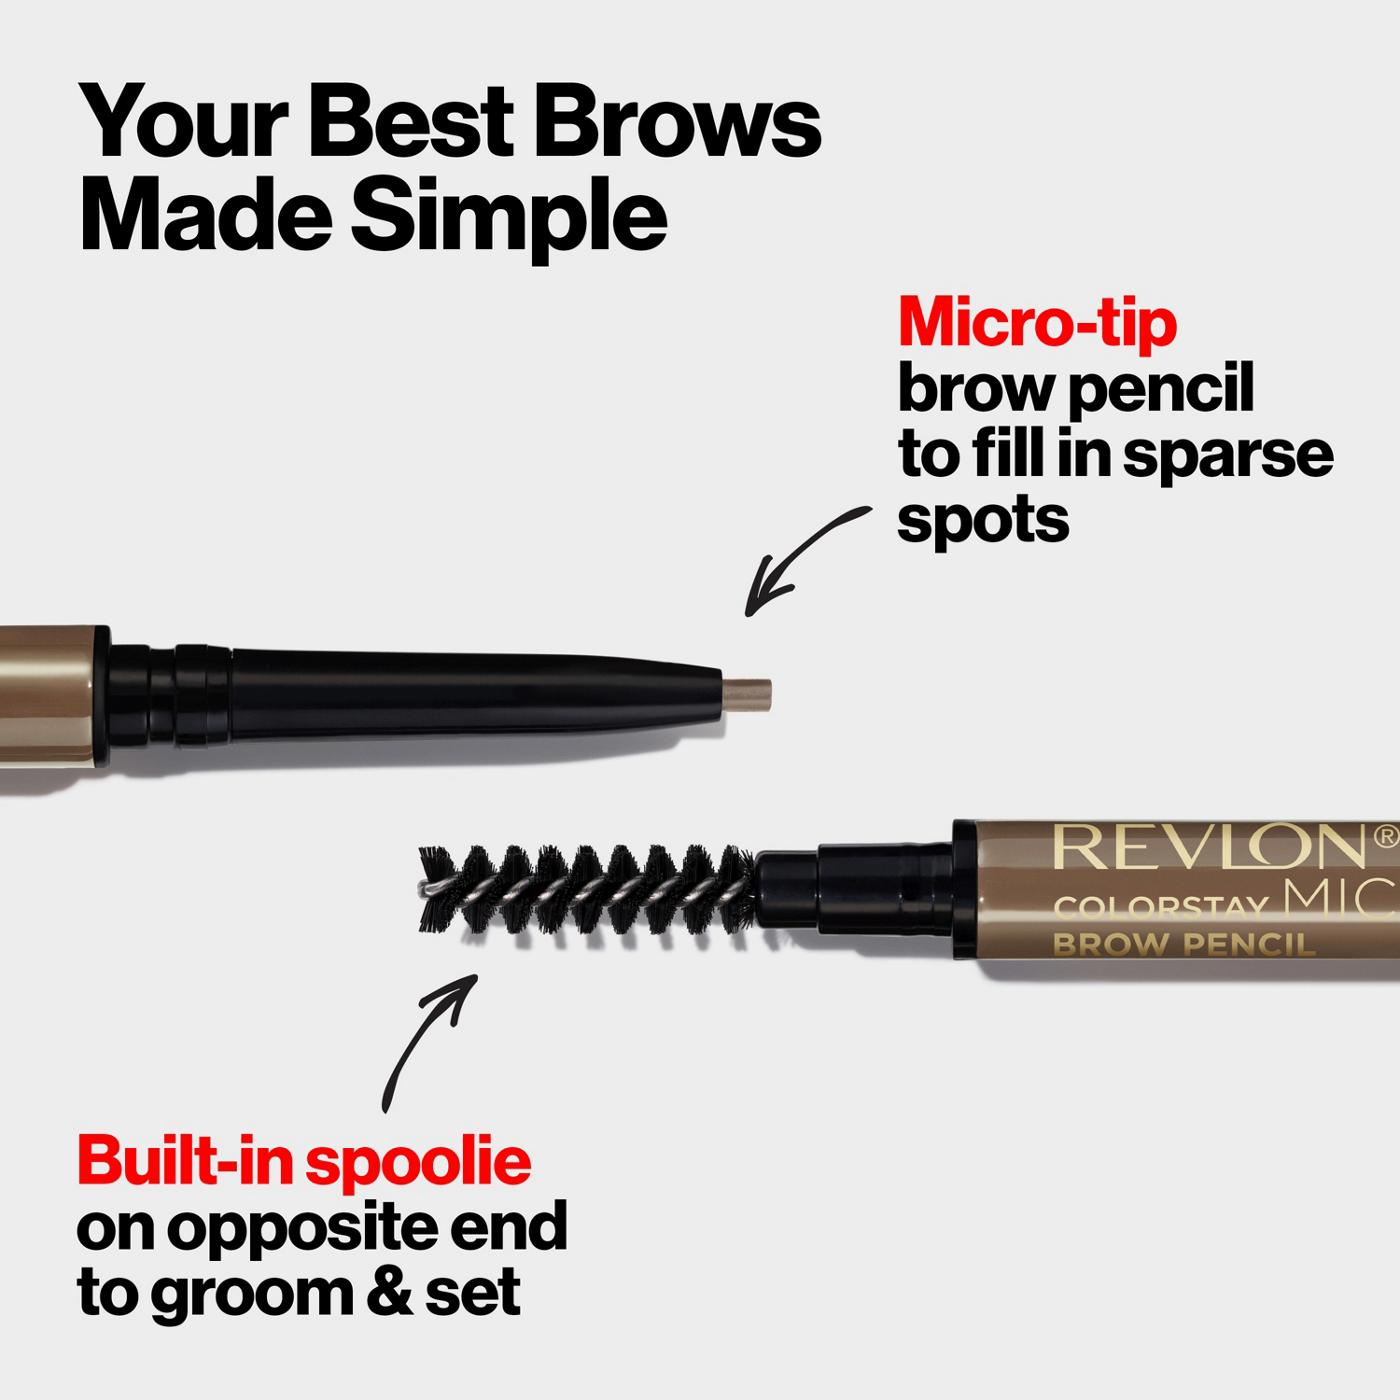 Revlon ColorStay Micro Brow Pencil - Dark Brown; image 4 of 9